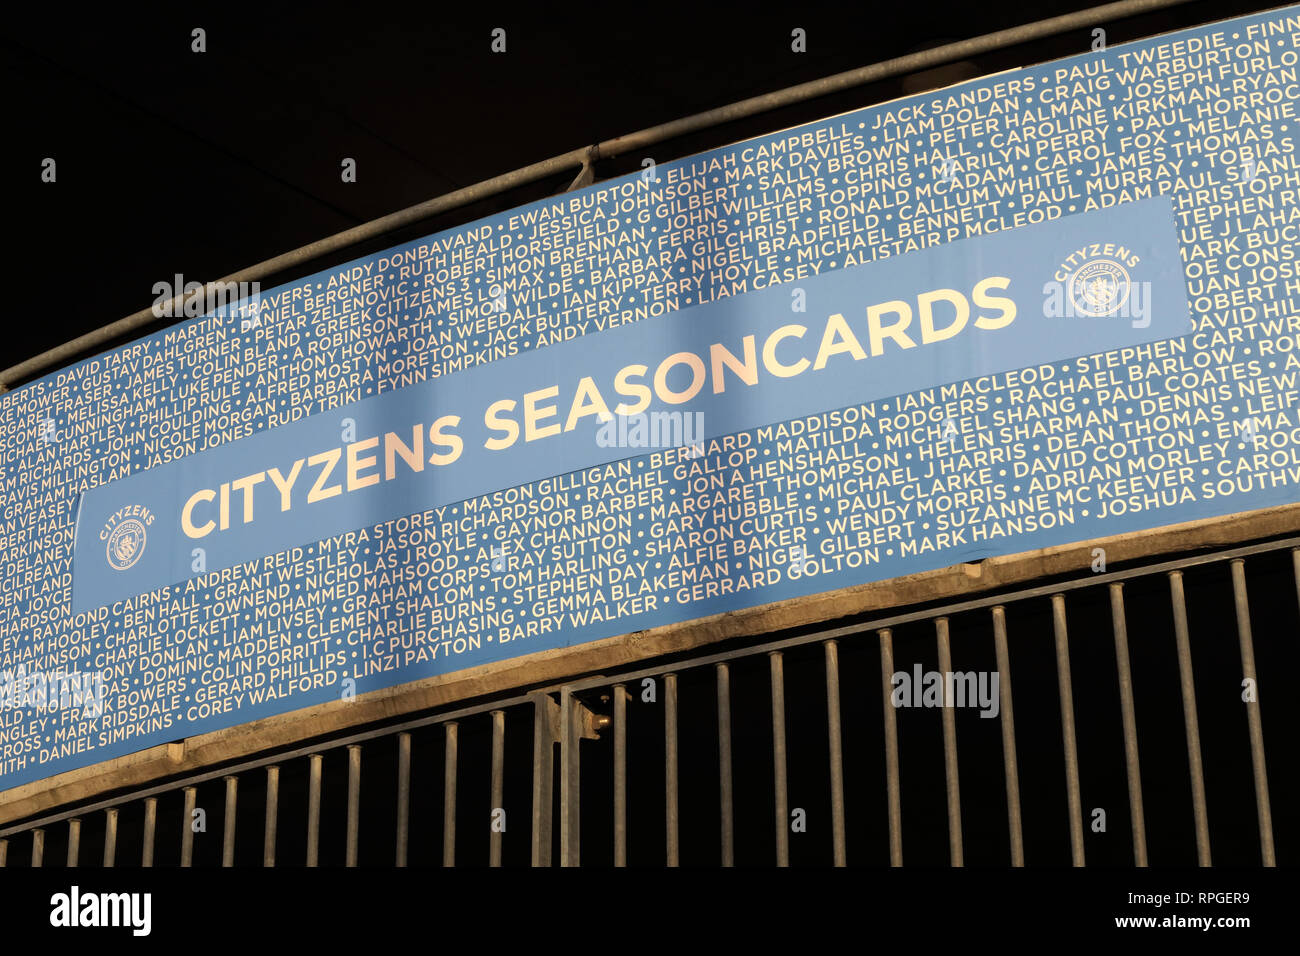 MCFC Manchester City, das Etihad Stadium, Cityzens, Seasoncards, Season Ticket Karten, Fußball Club Stockfoto